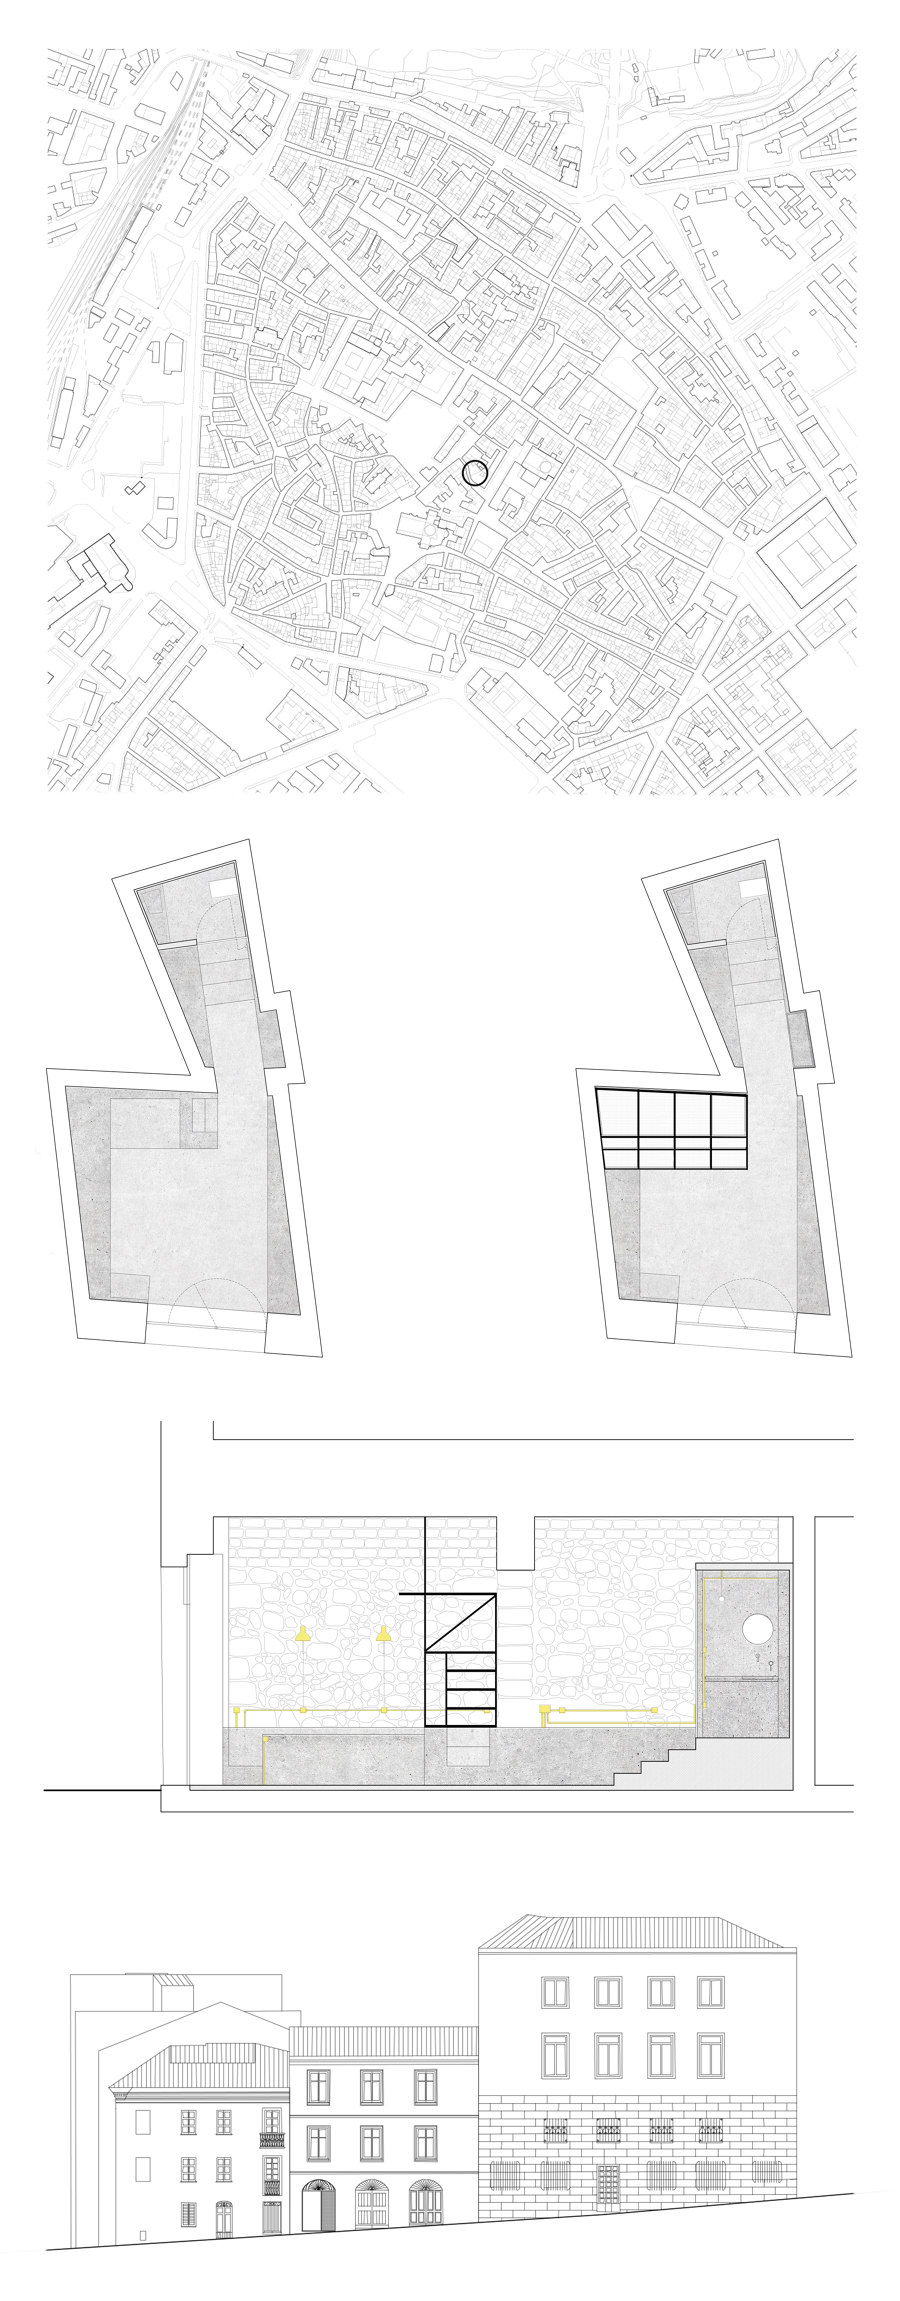 3B Office by Cuccuru Pisano Architettura | Office facilities